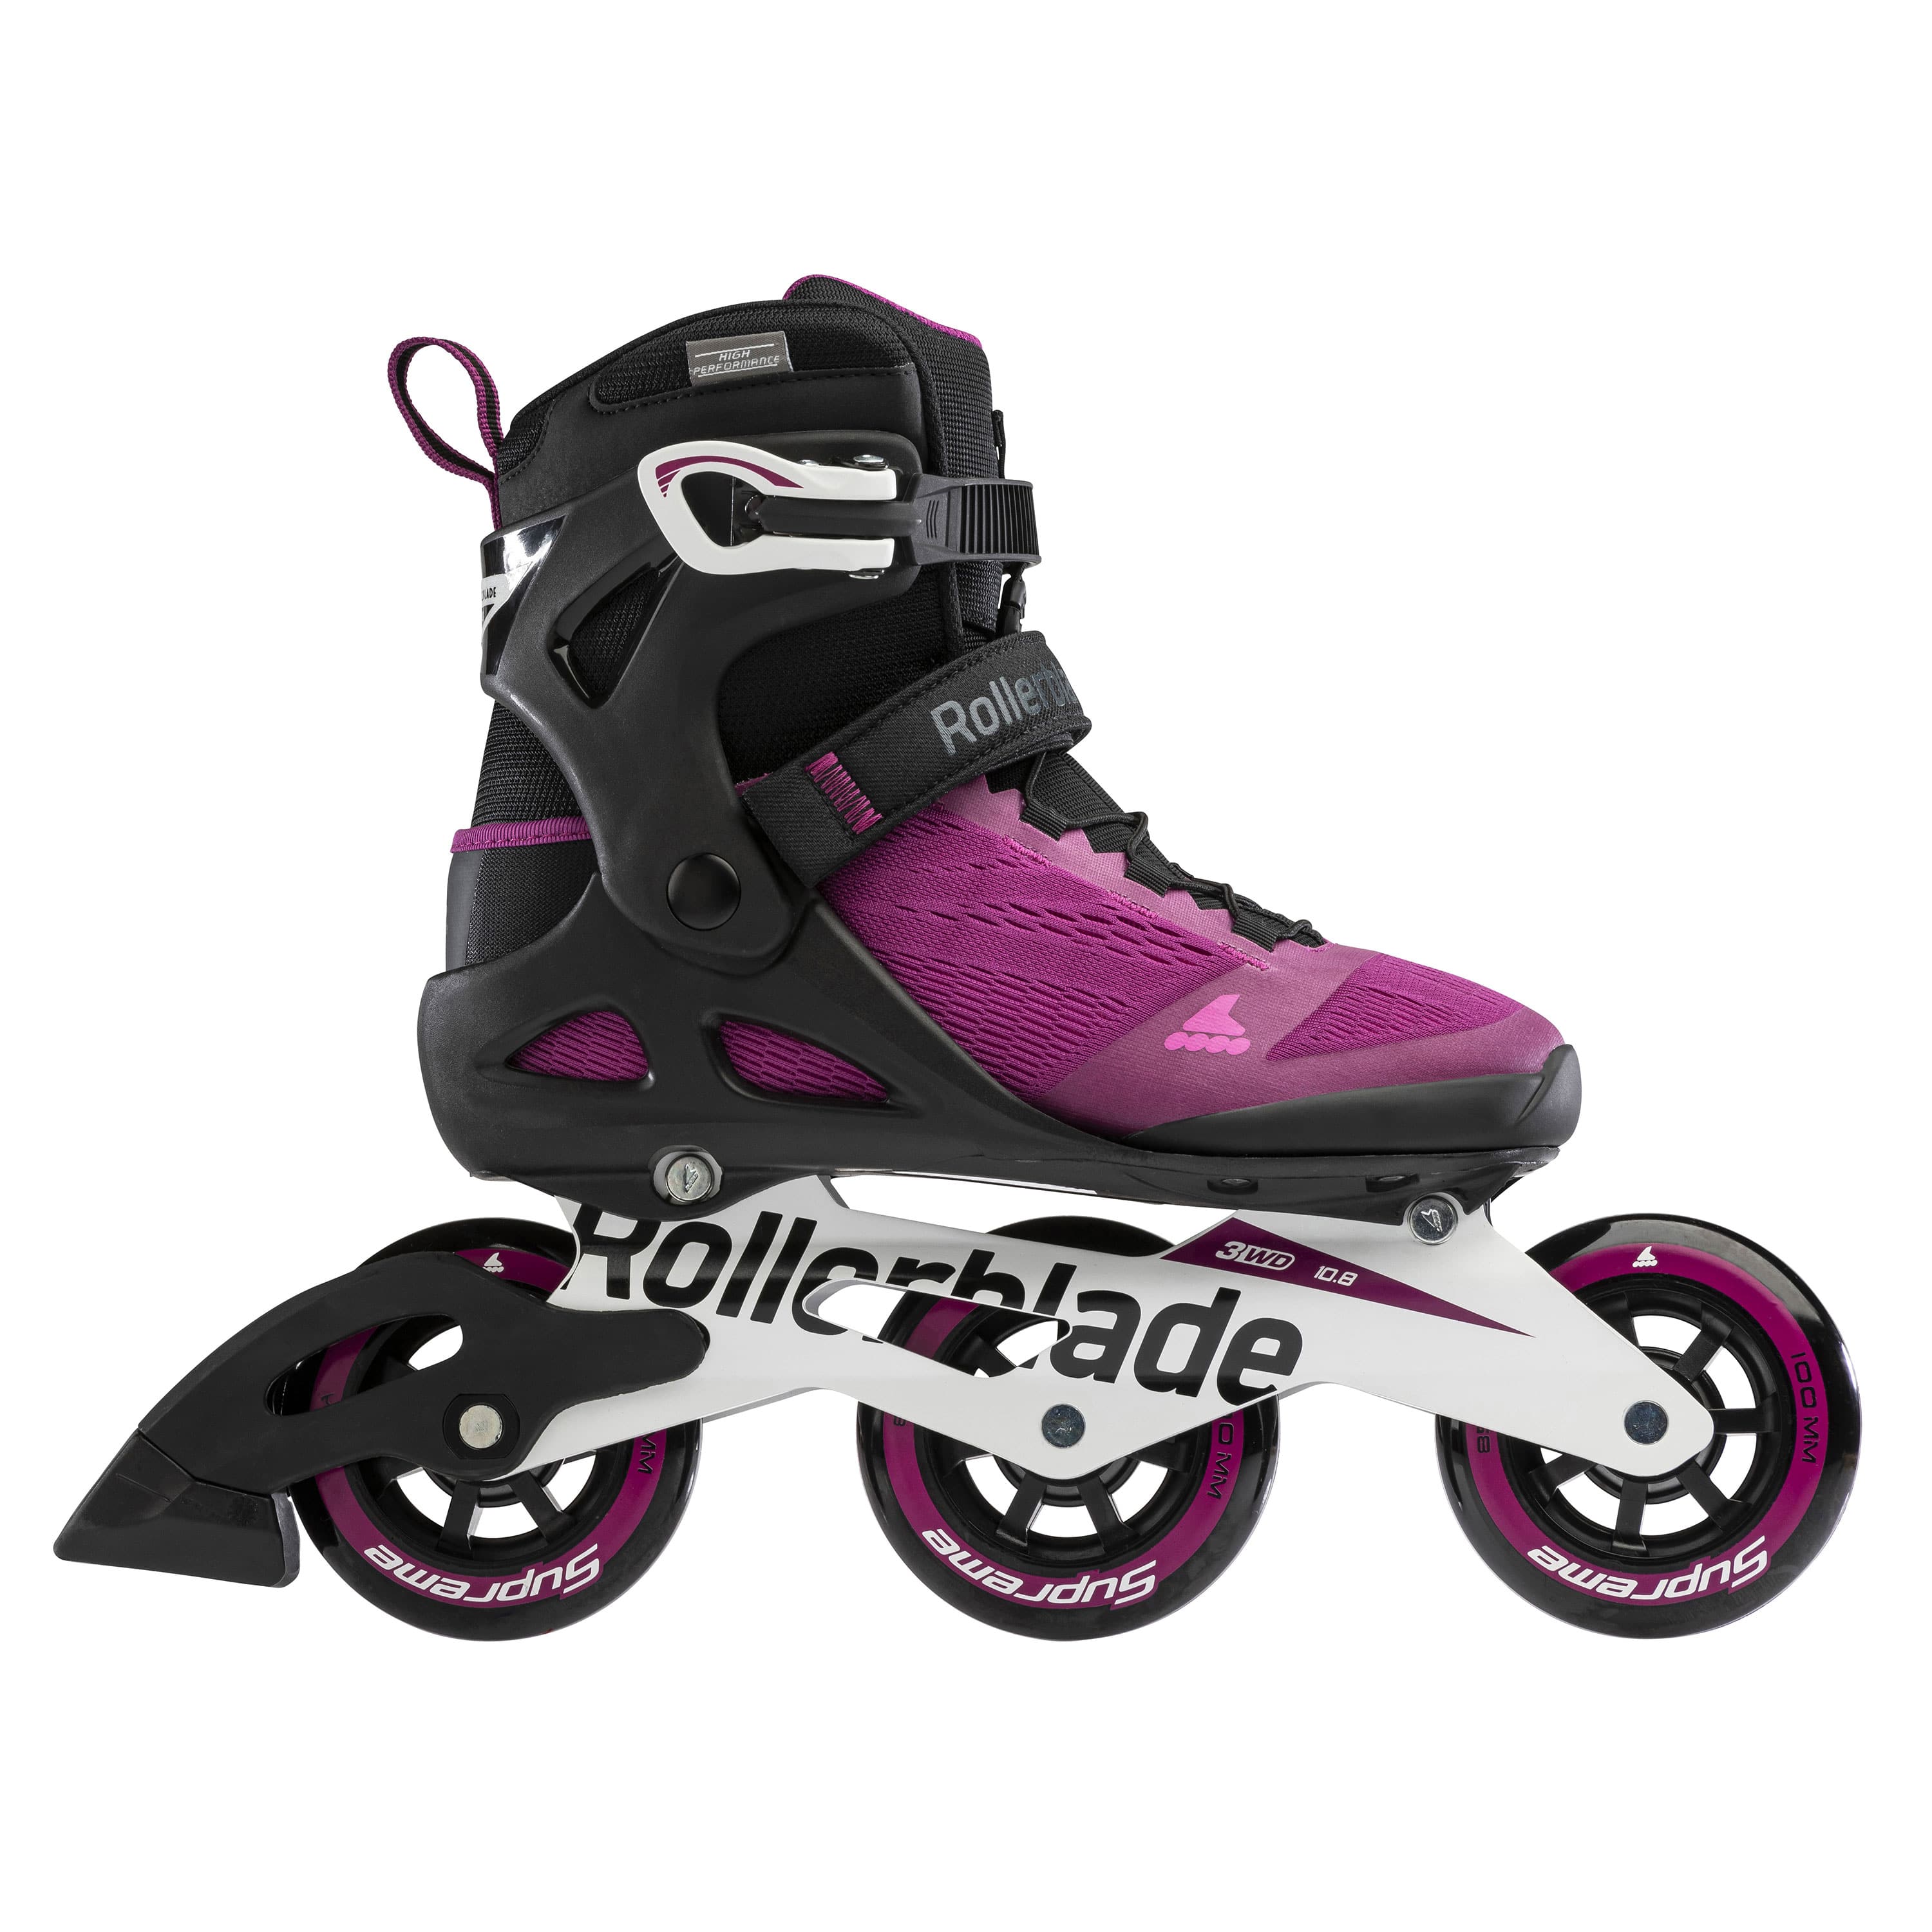 Rollerblade inline skate Macroblade 100 3WD WOMEN'S size 8 